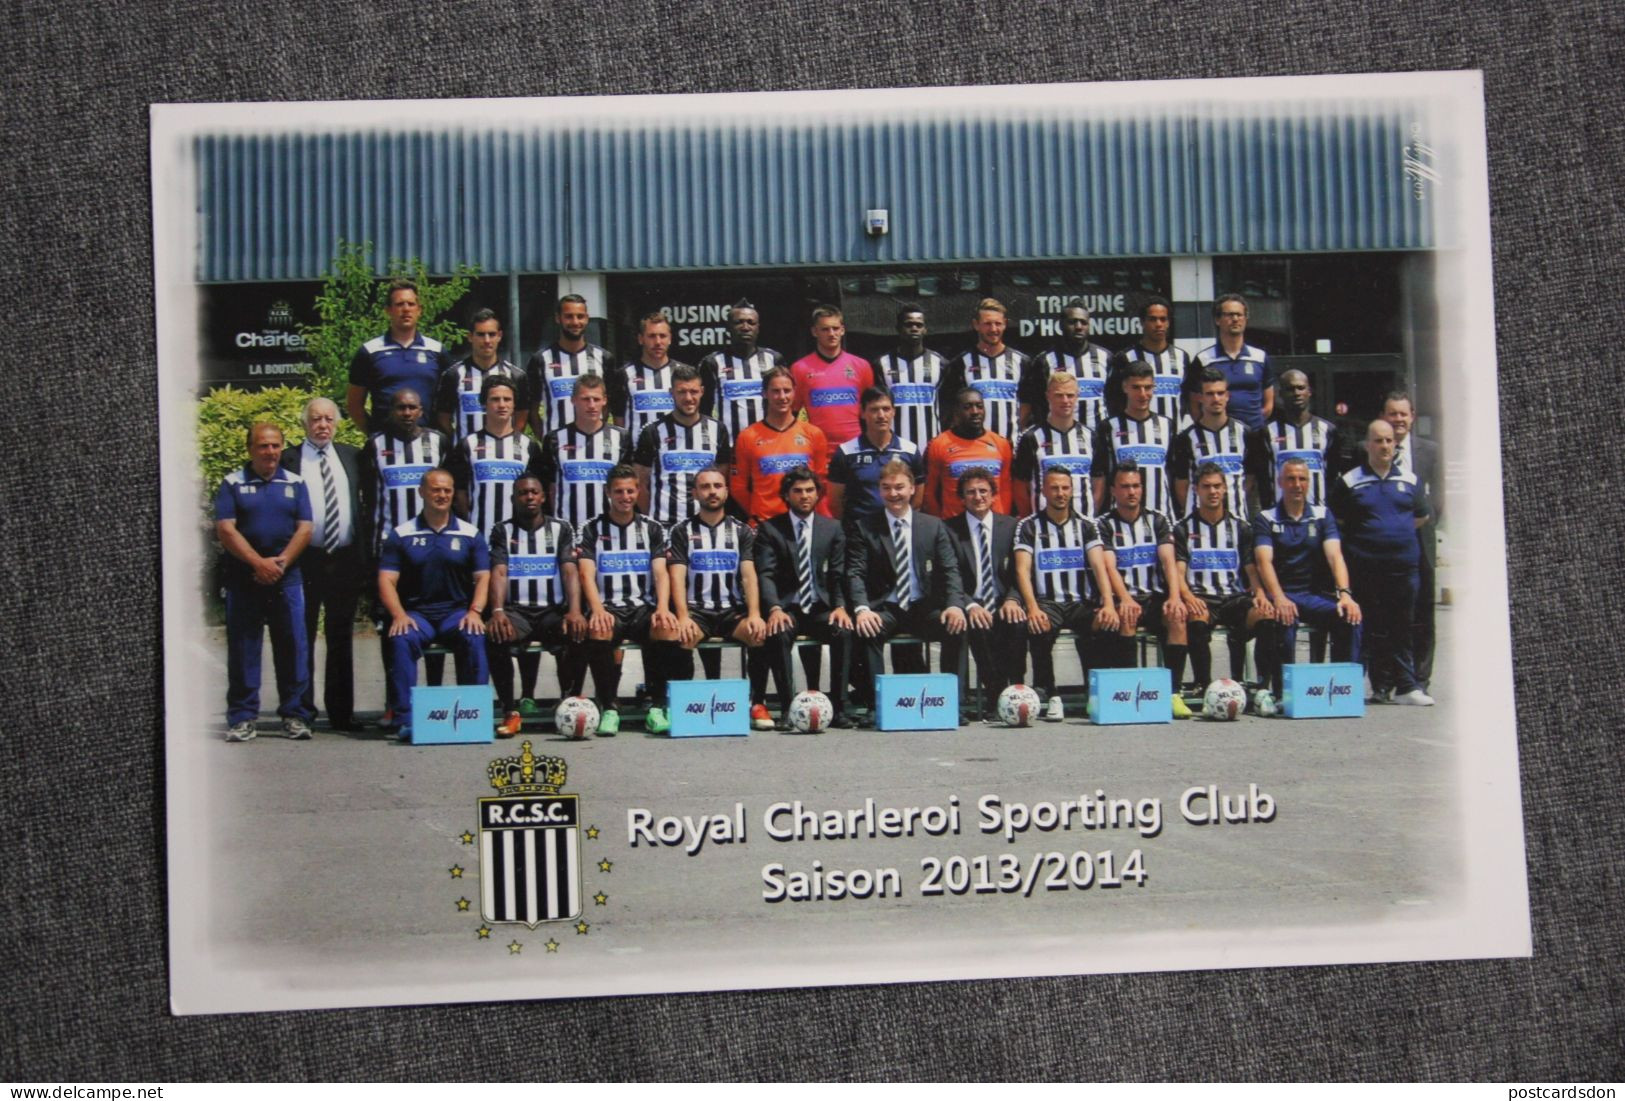 FUSSBALL-FOOTBALL-SOCCER- CALCIO, -Royal Charleroi Sporting Club -  OLD Photo Postcard Size - Football